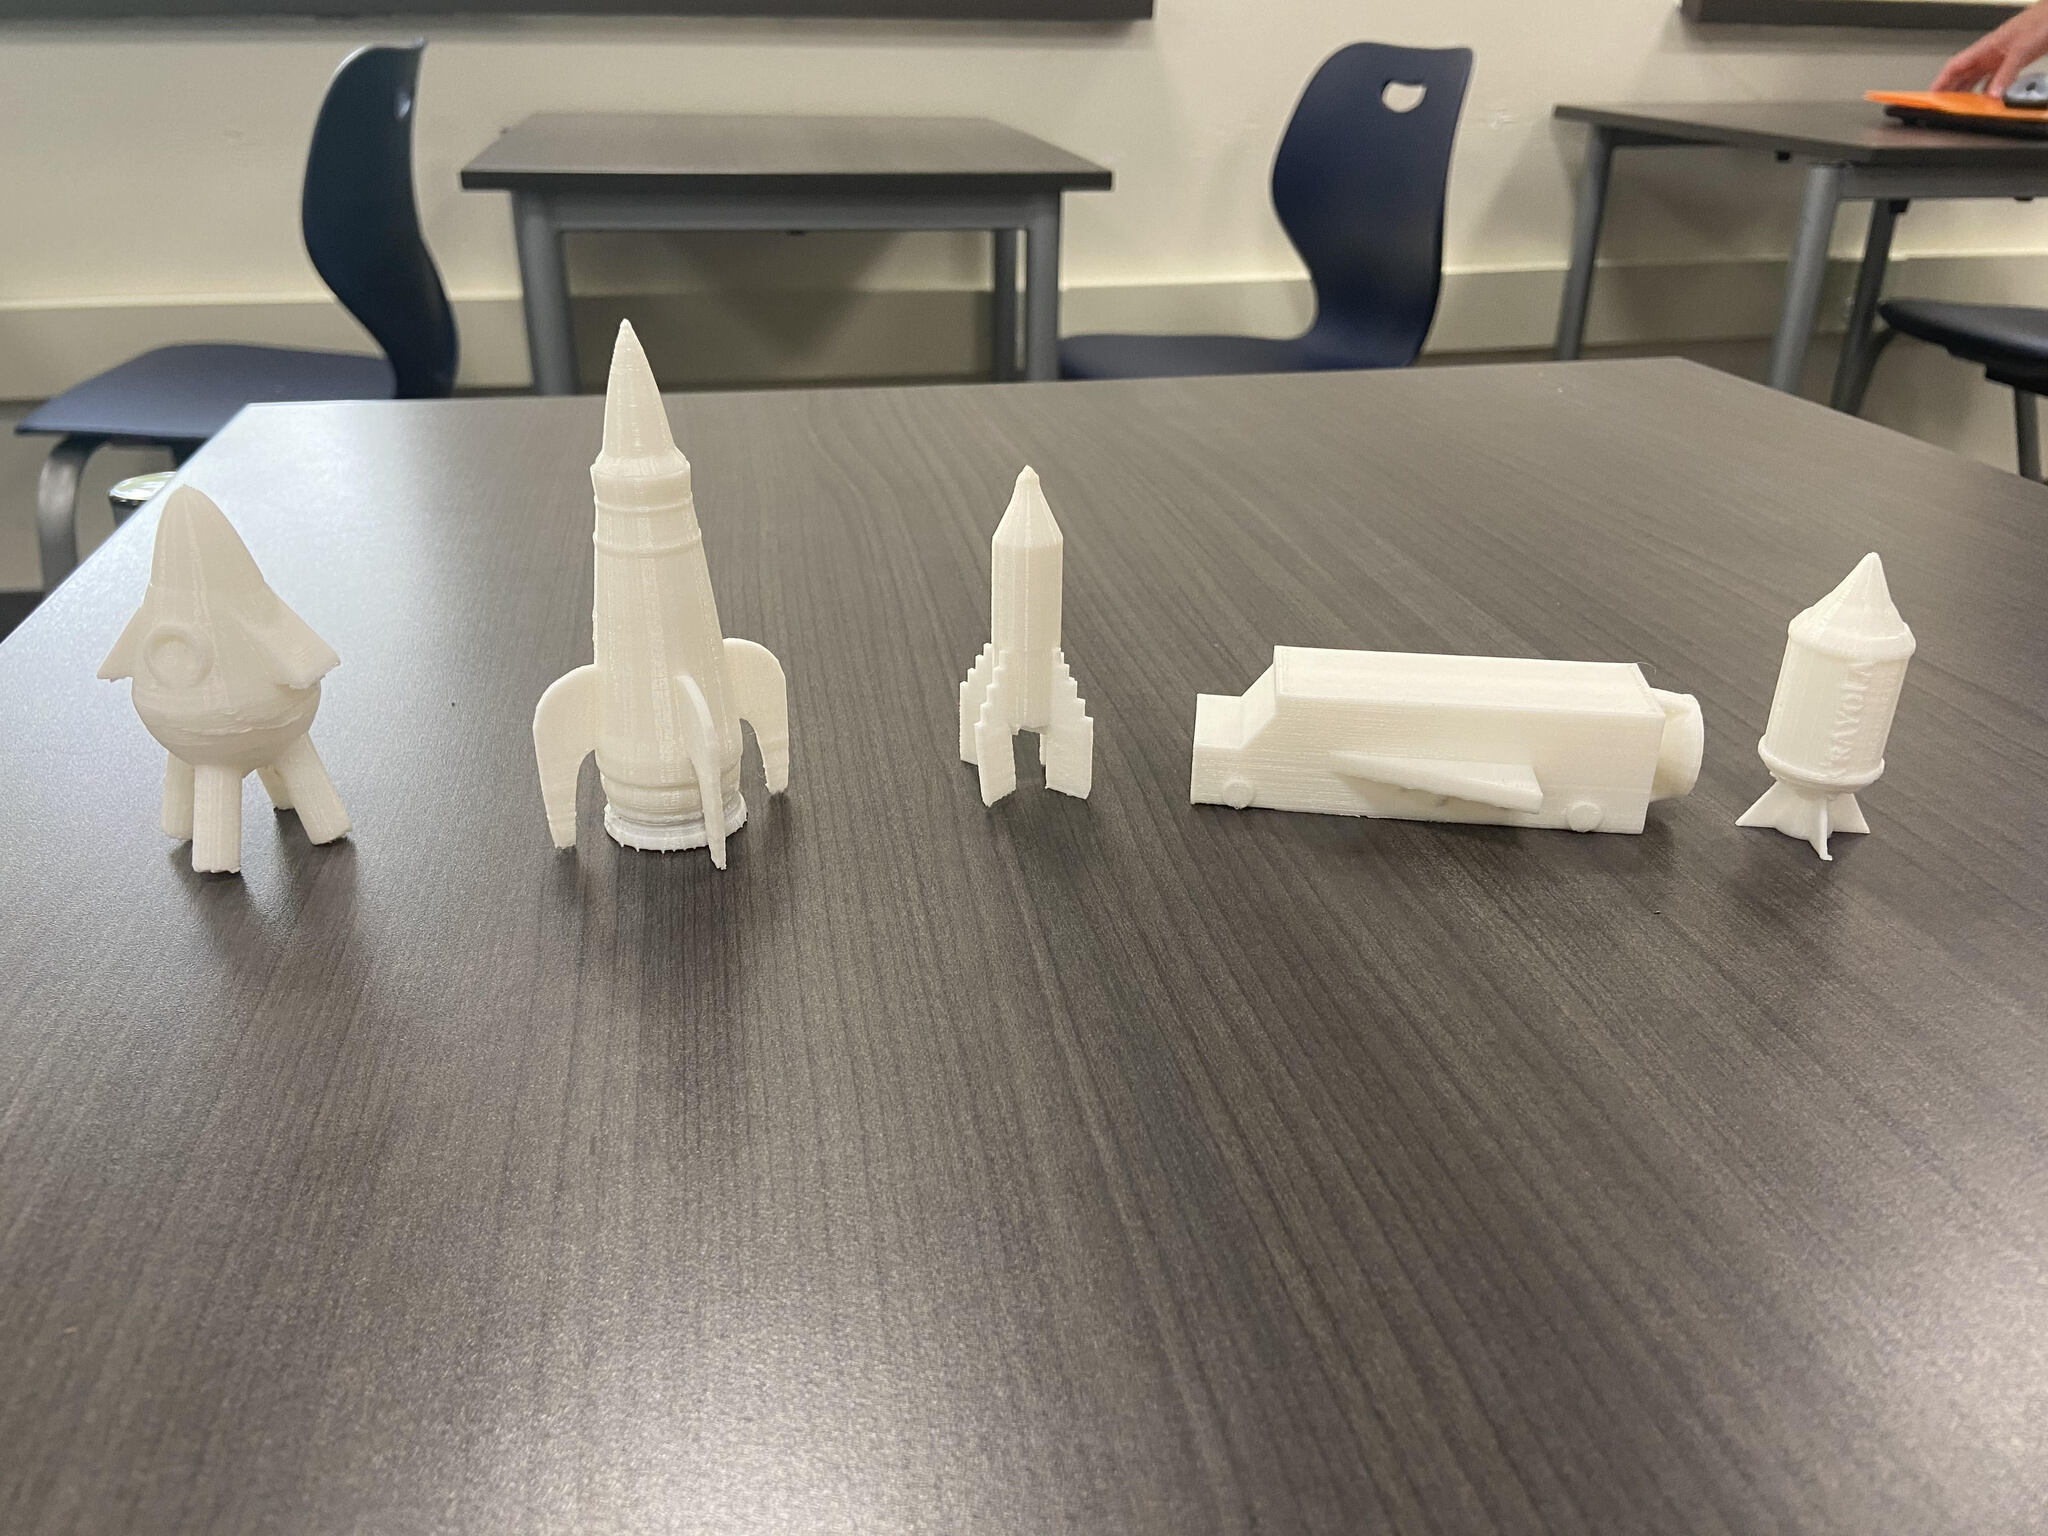 Mr. Ball's Robotics student's 3-D printed rockets.